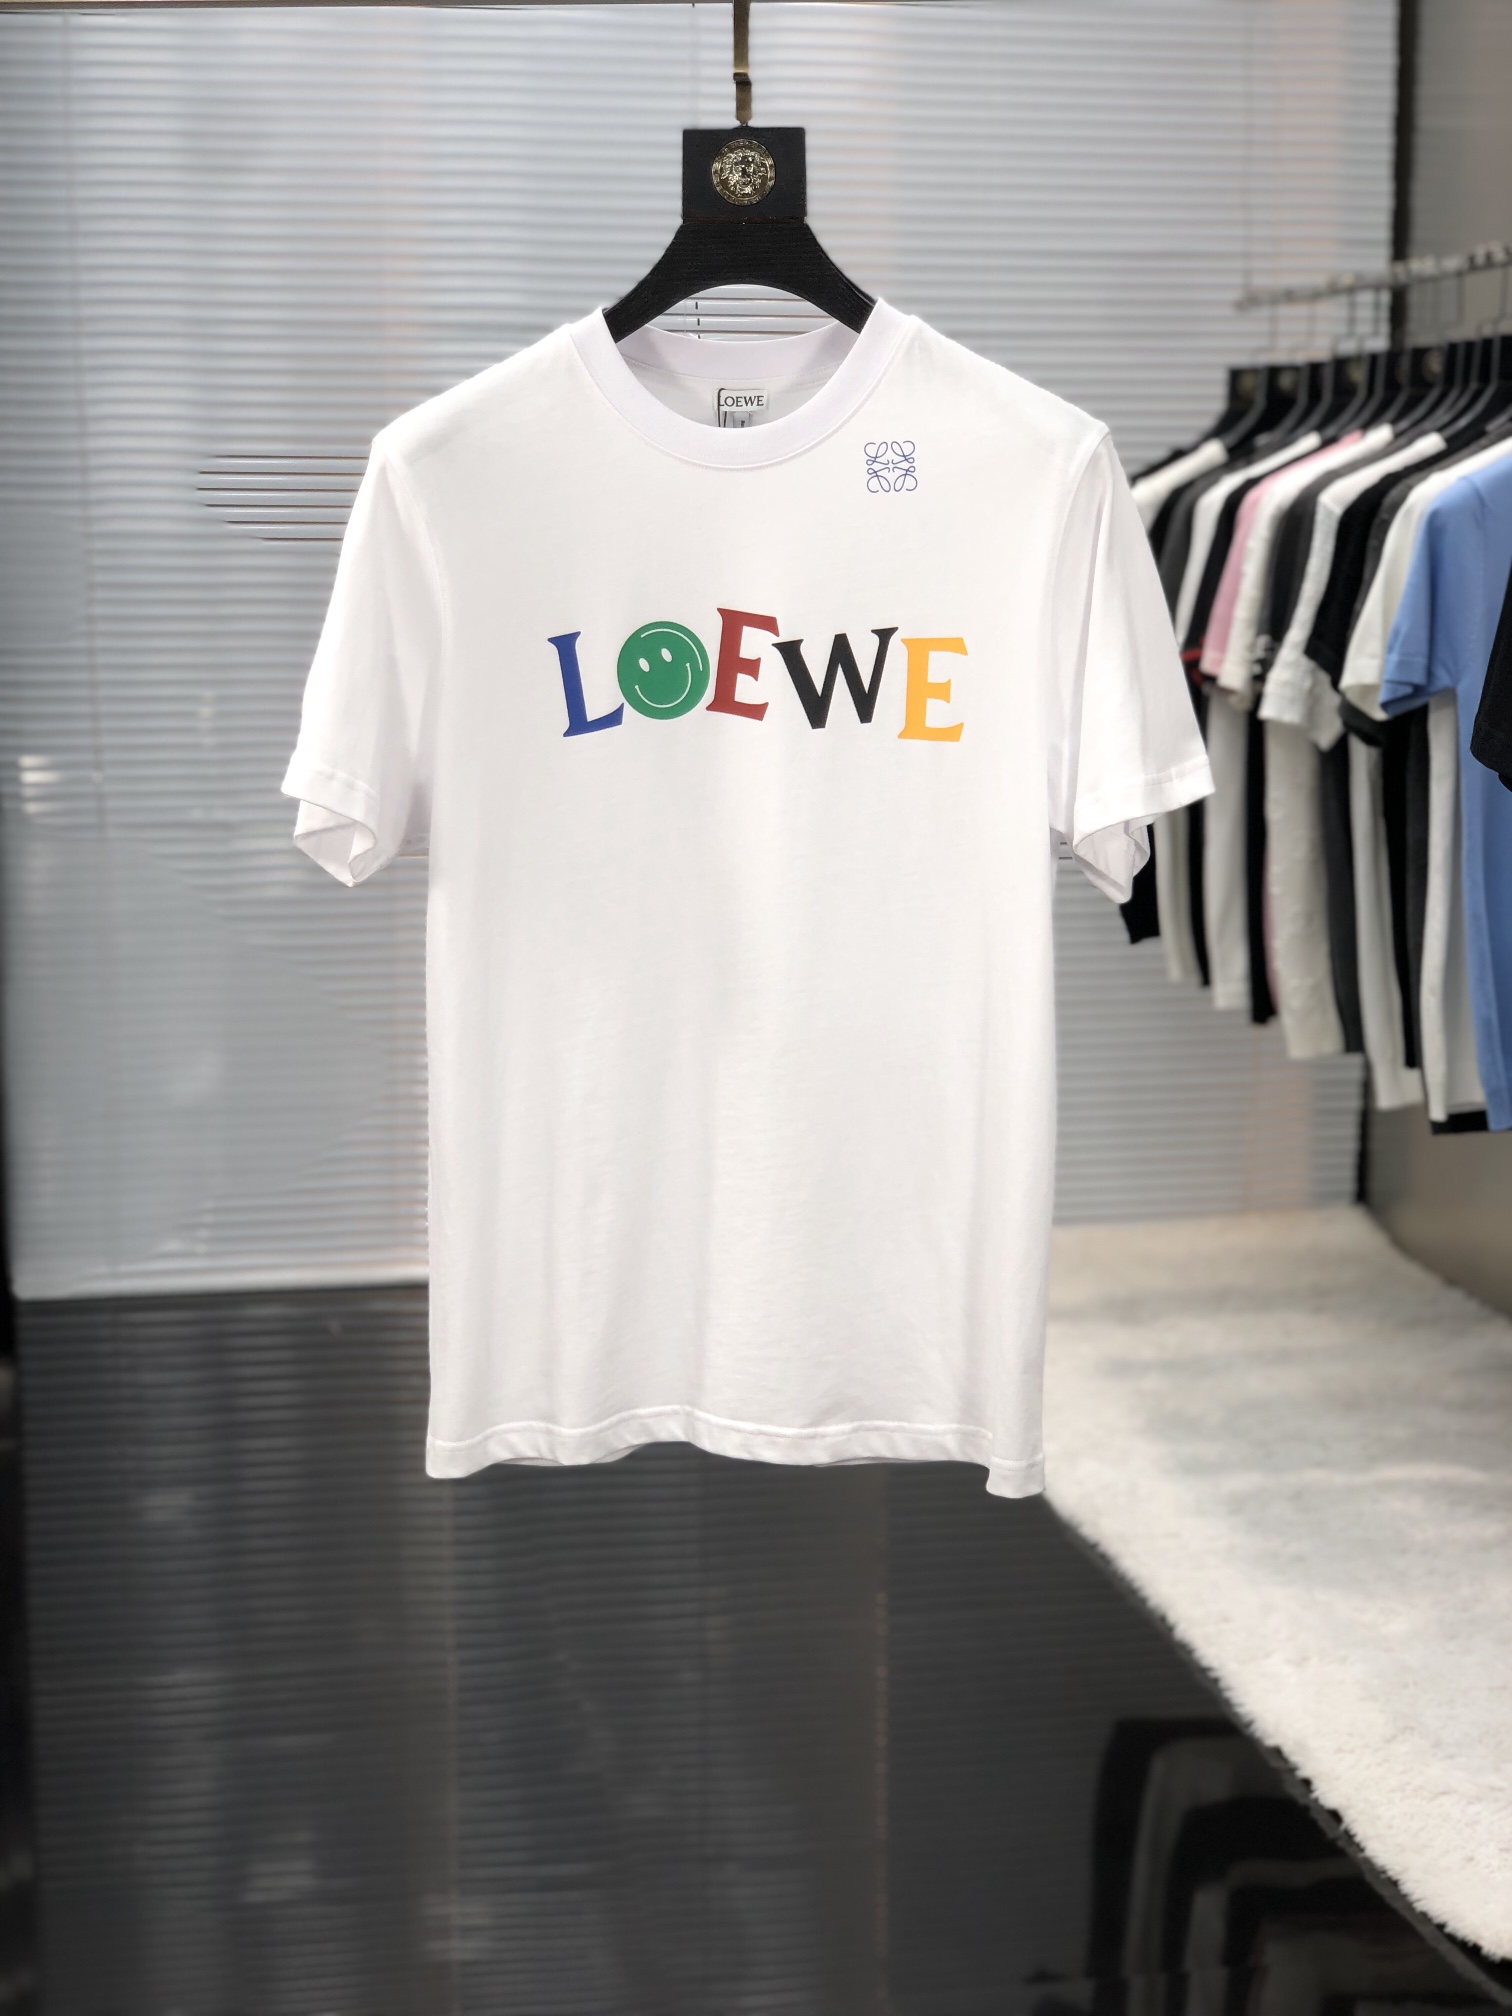 Loewe Summer Classic Logo Printed Unisex Fashion Short Sleeve